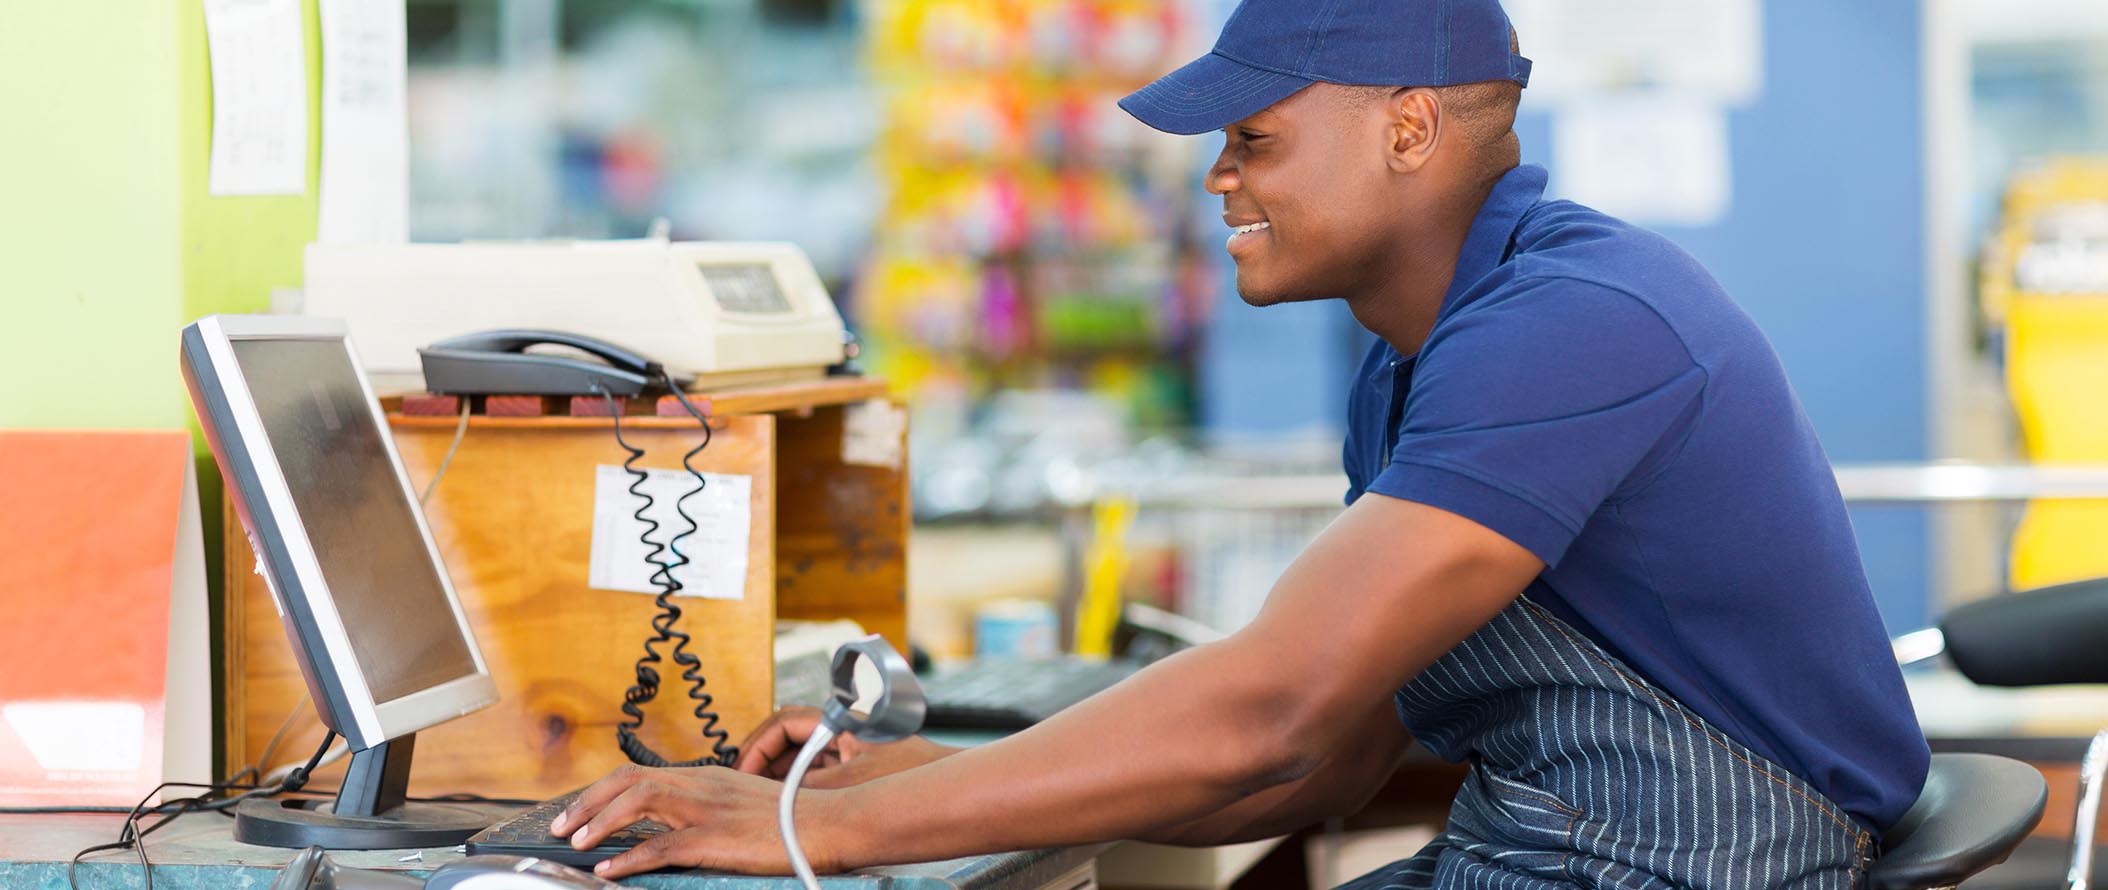 ret-male-cashier-working-at-store-banner.jpg